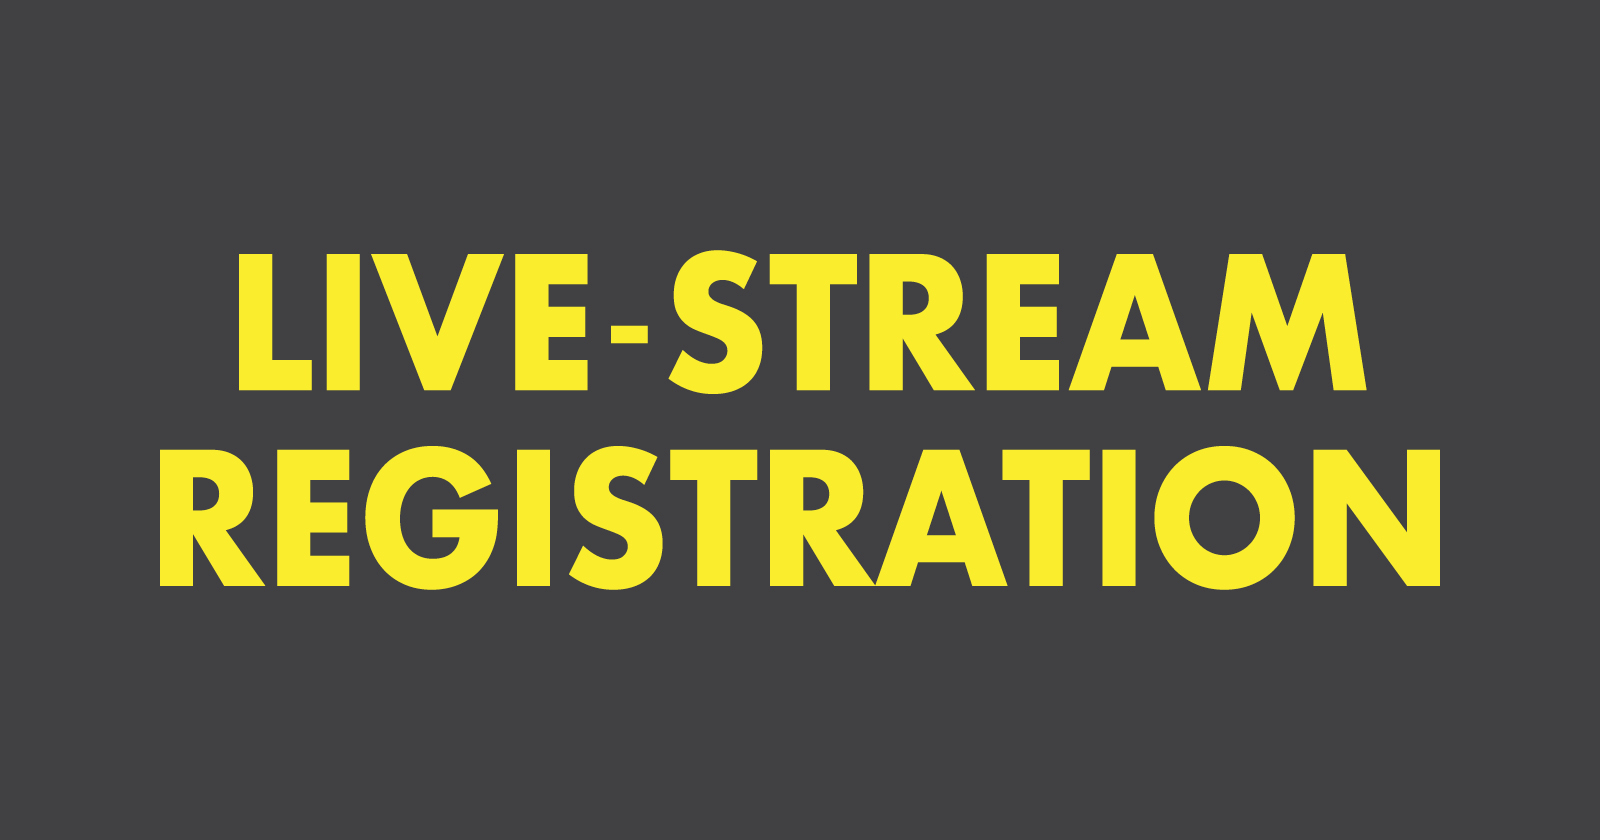 Live-stream Registration